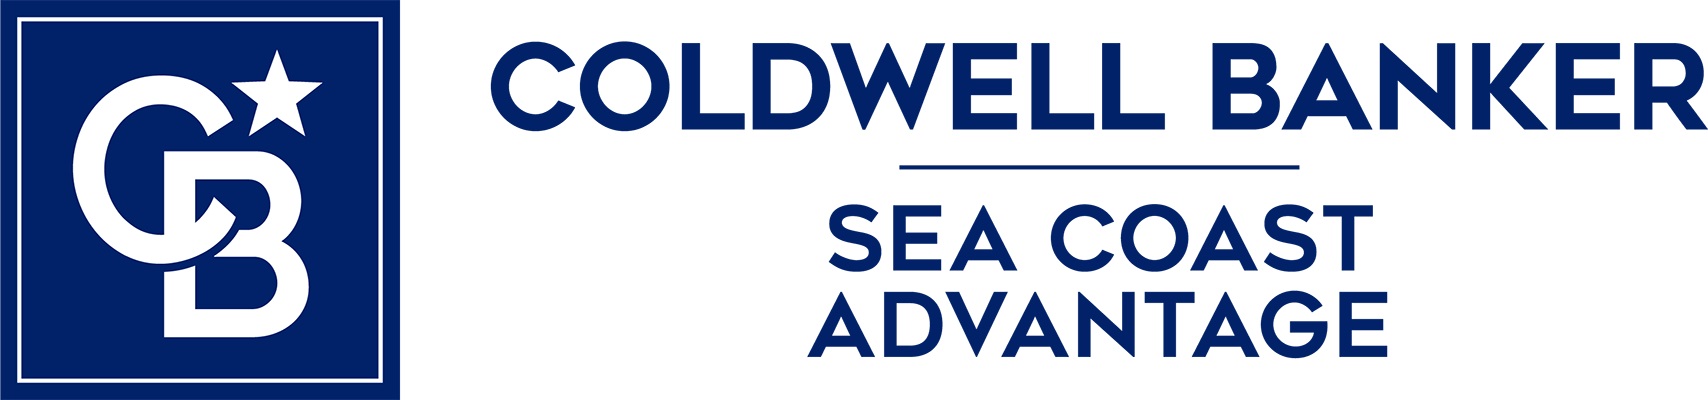 Holly Hobbs - Coldwell Banker Sea Coast Advantage Realty Logo